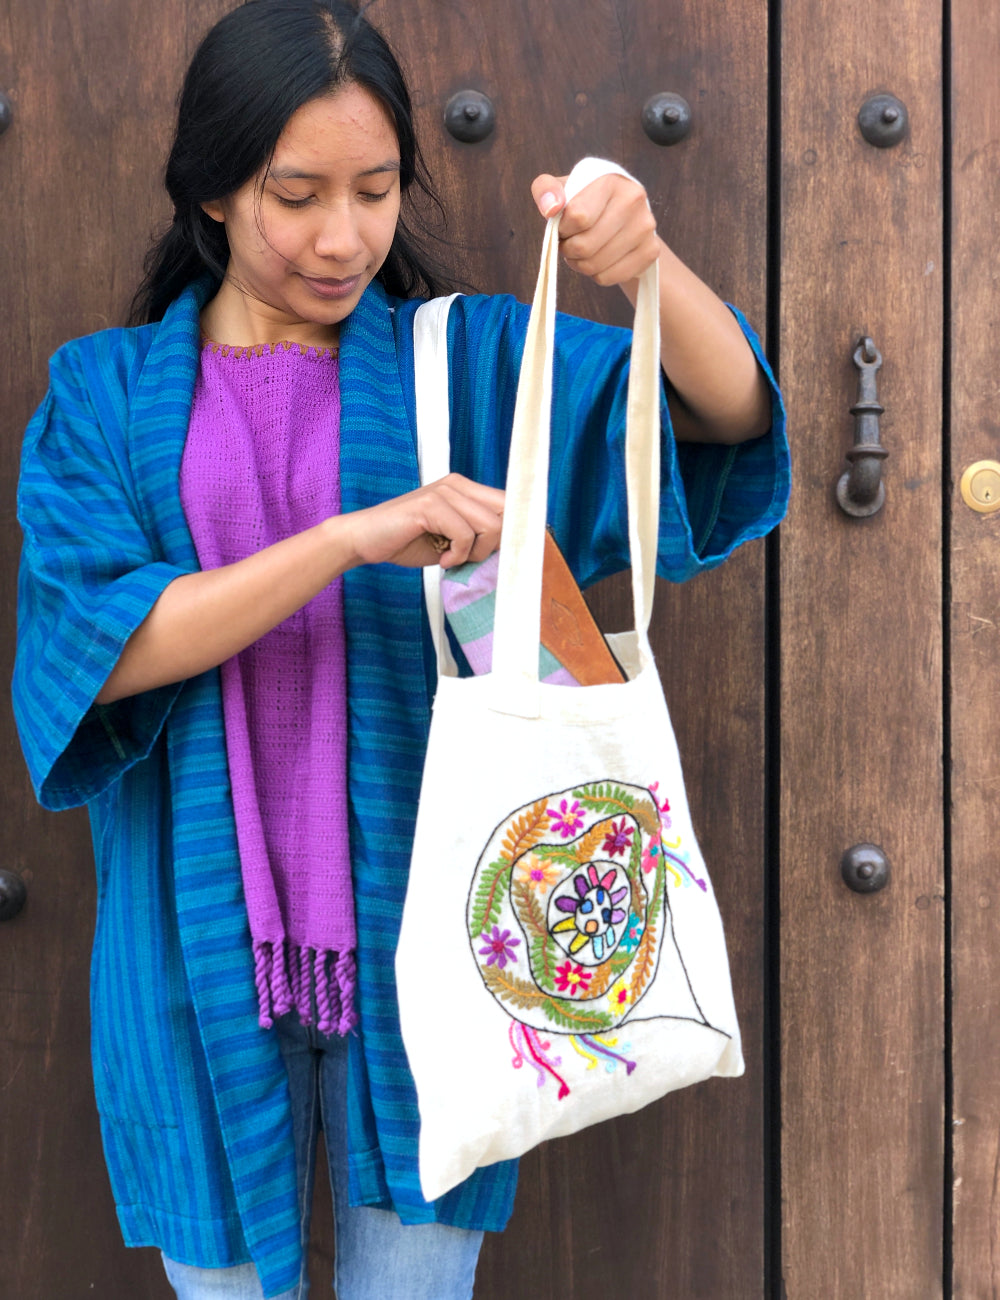 Embroidered Bag: Barriletes